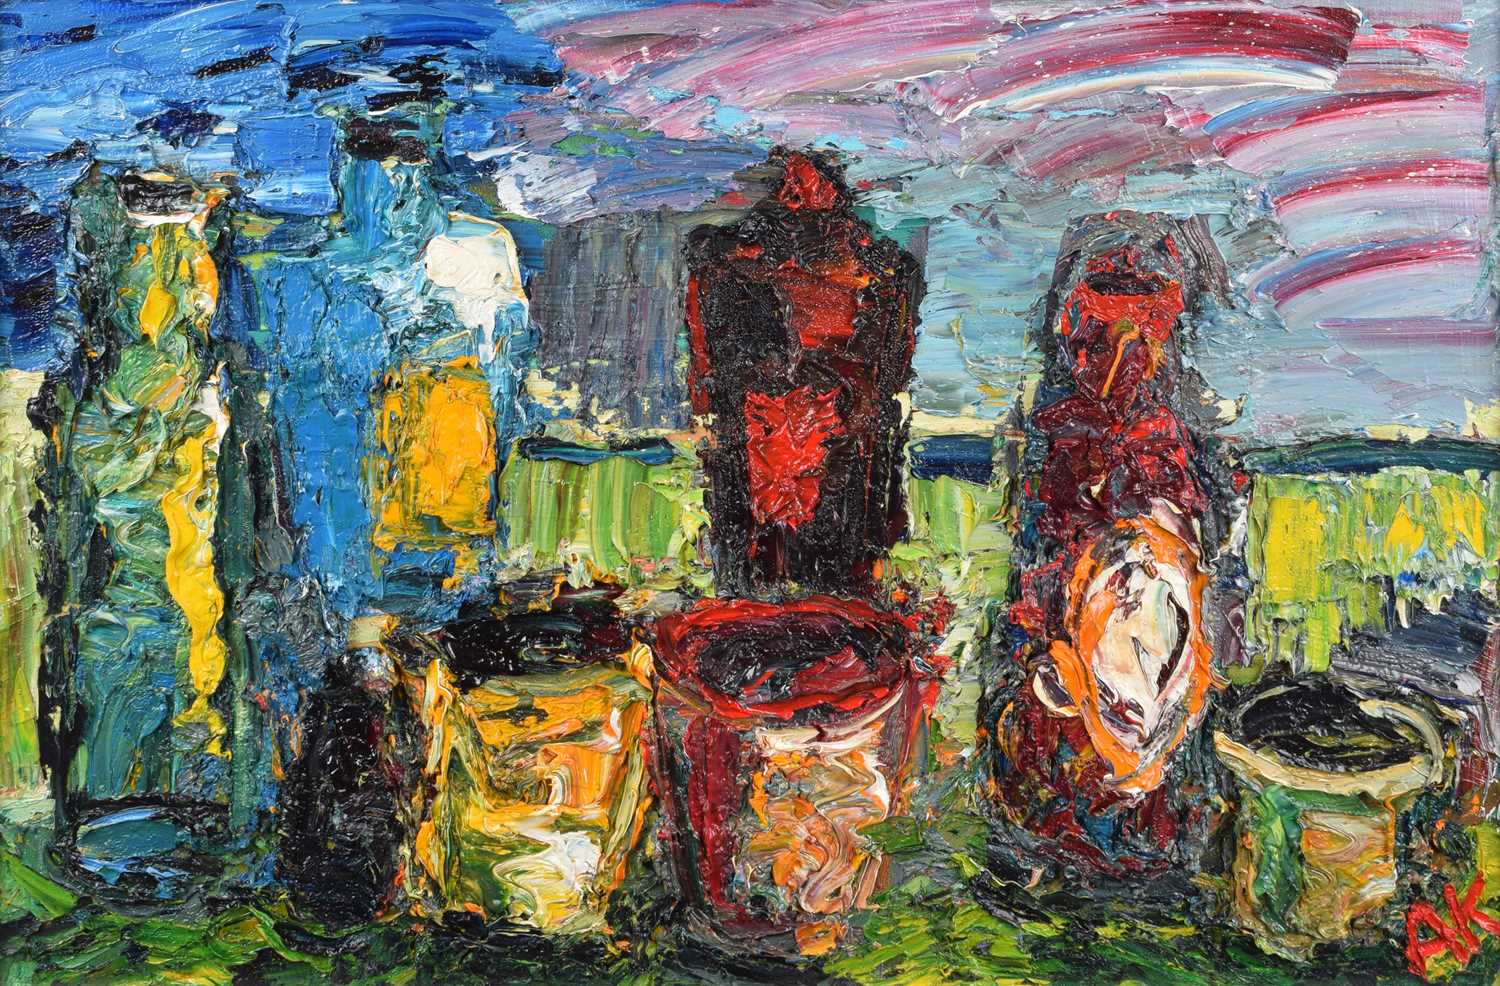 Alan Knight (British 1949-) "Bottles and Pots"